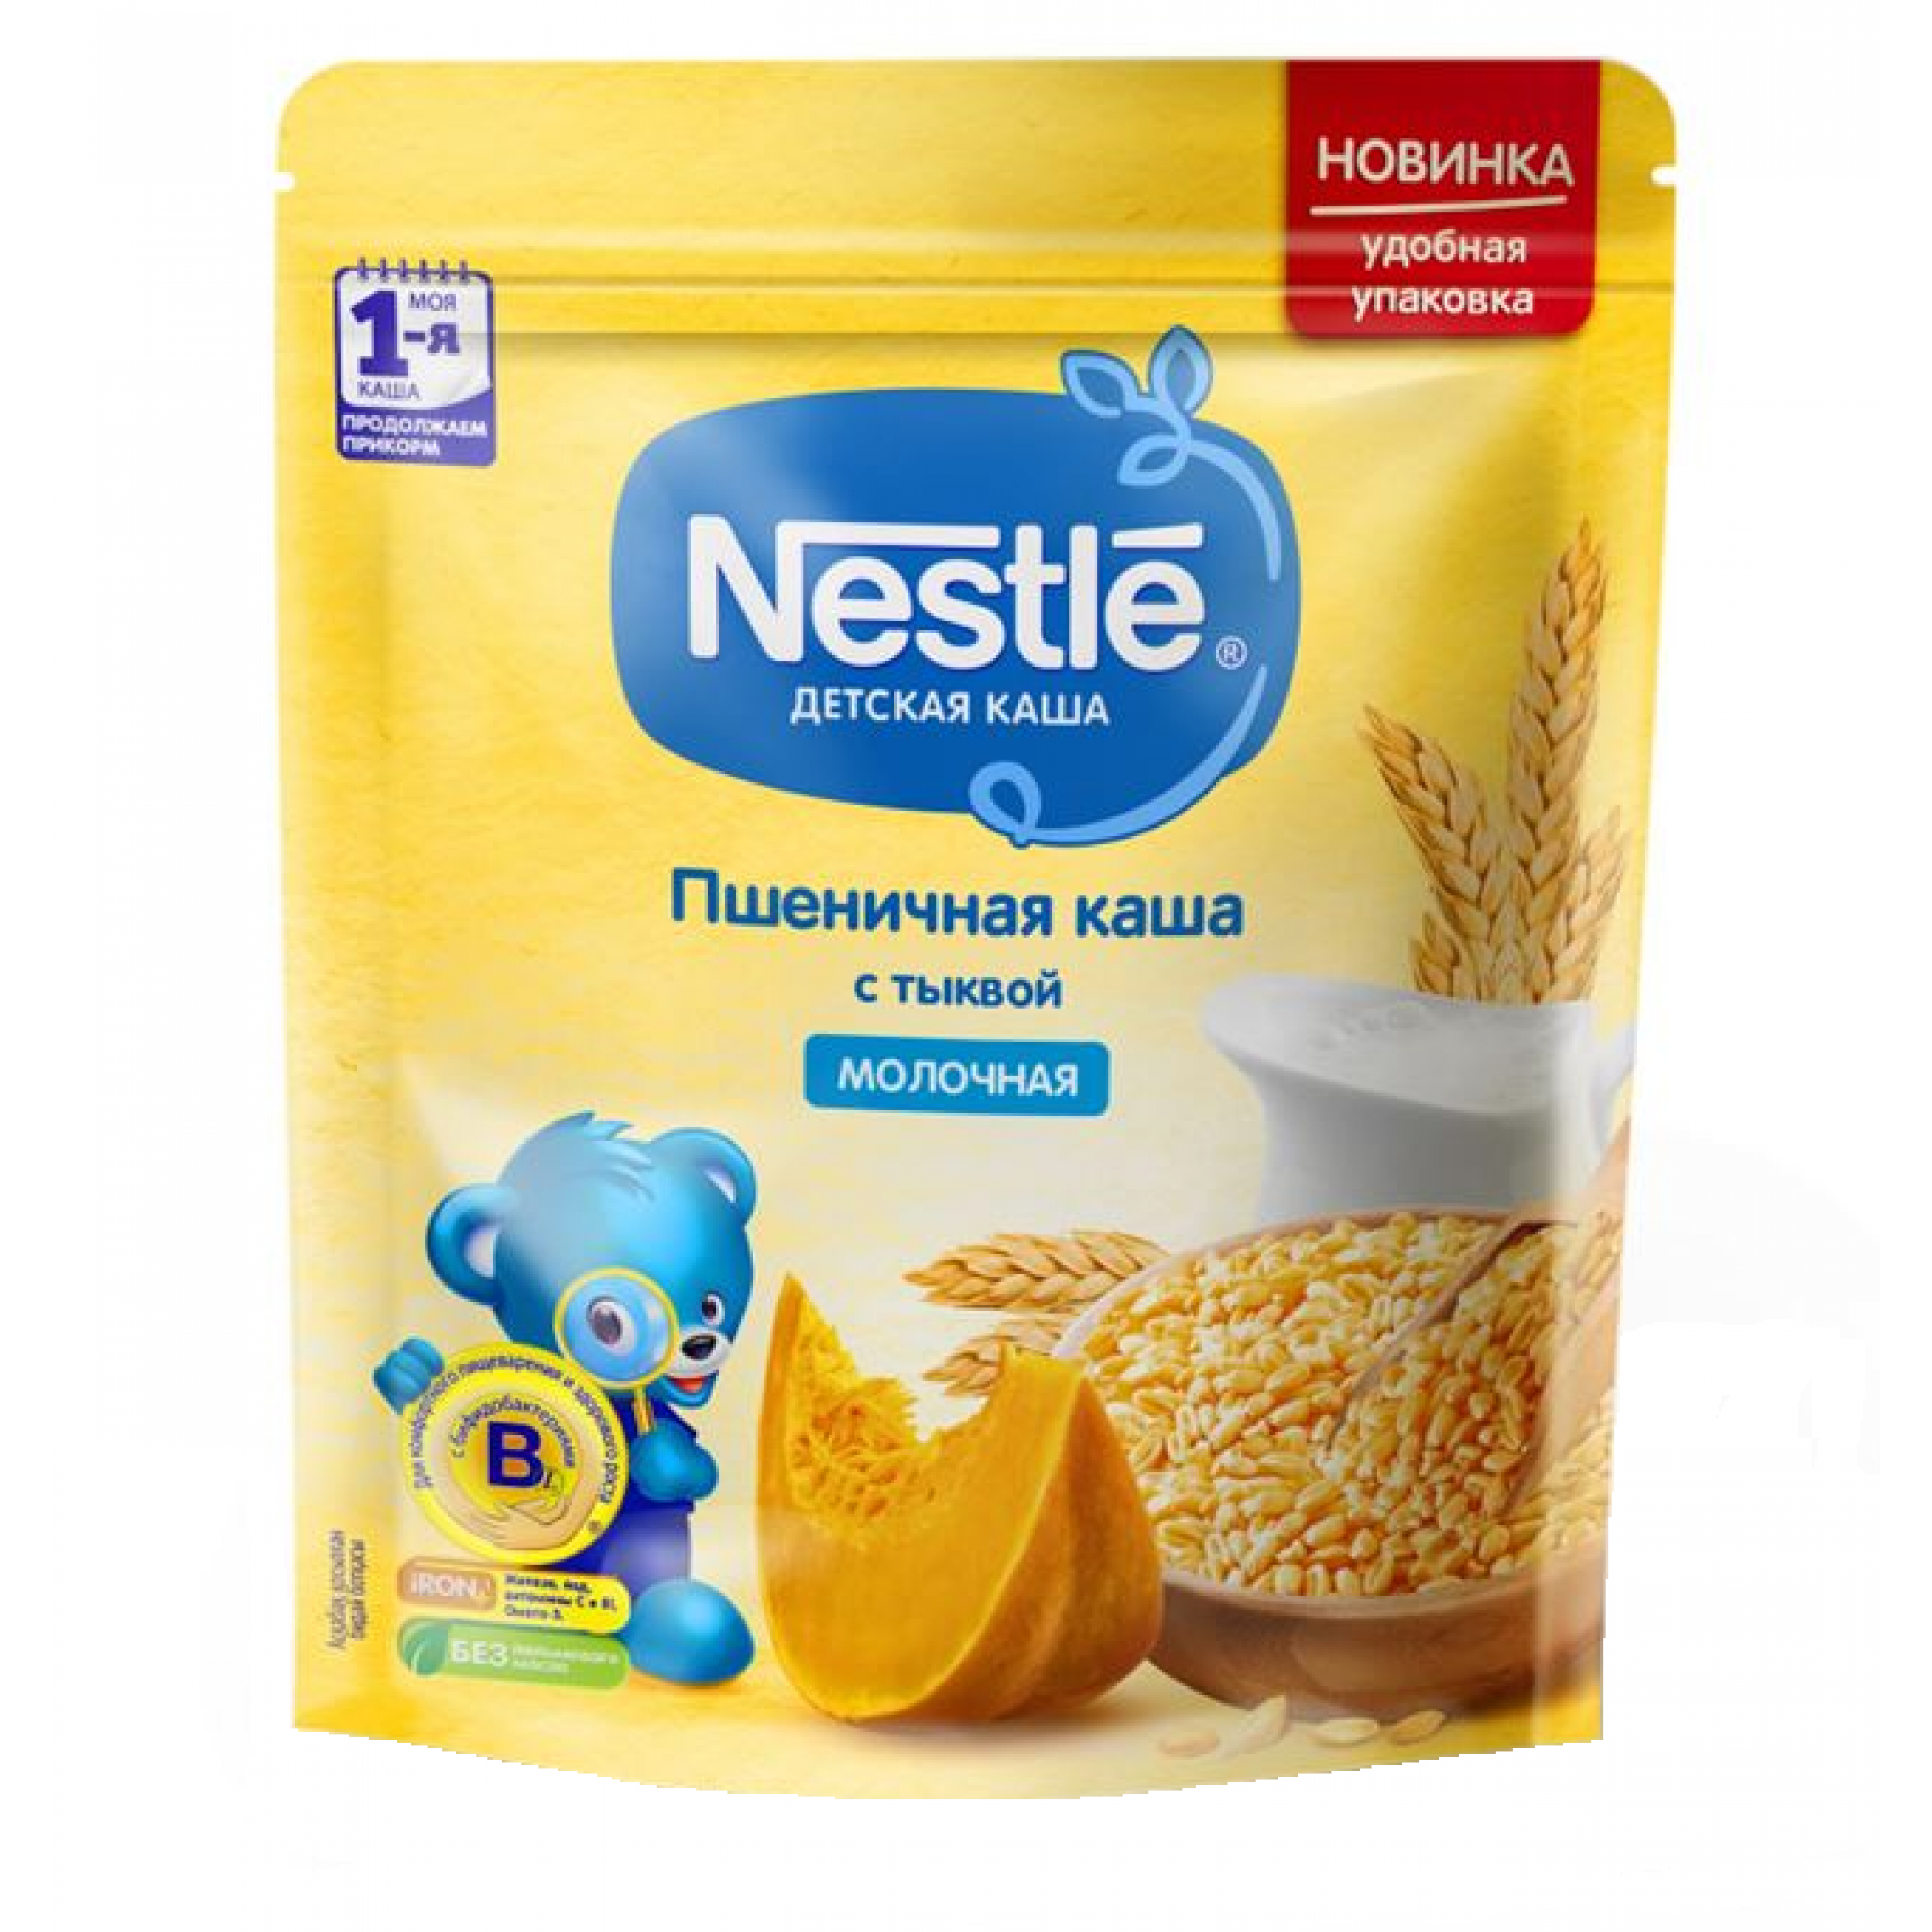 Молочная сухая пшеничная каша Шагайка Nestle с тыквой 220 г